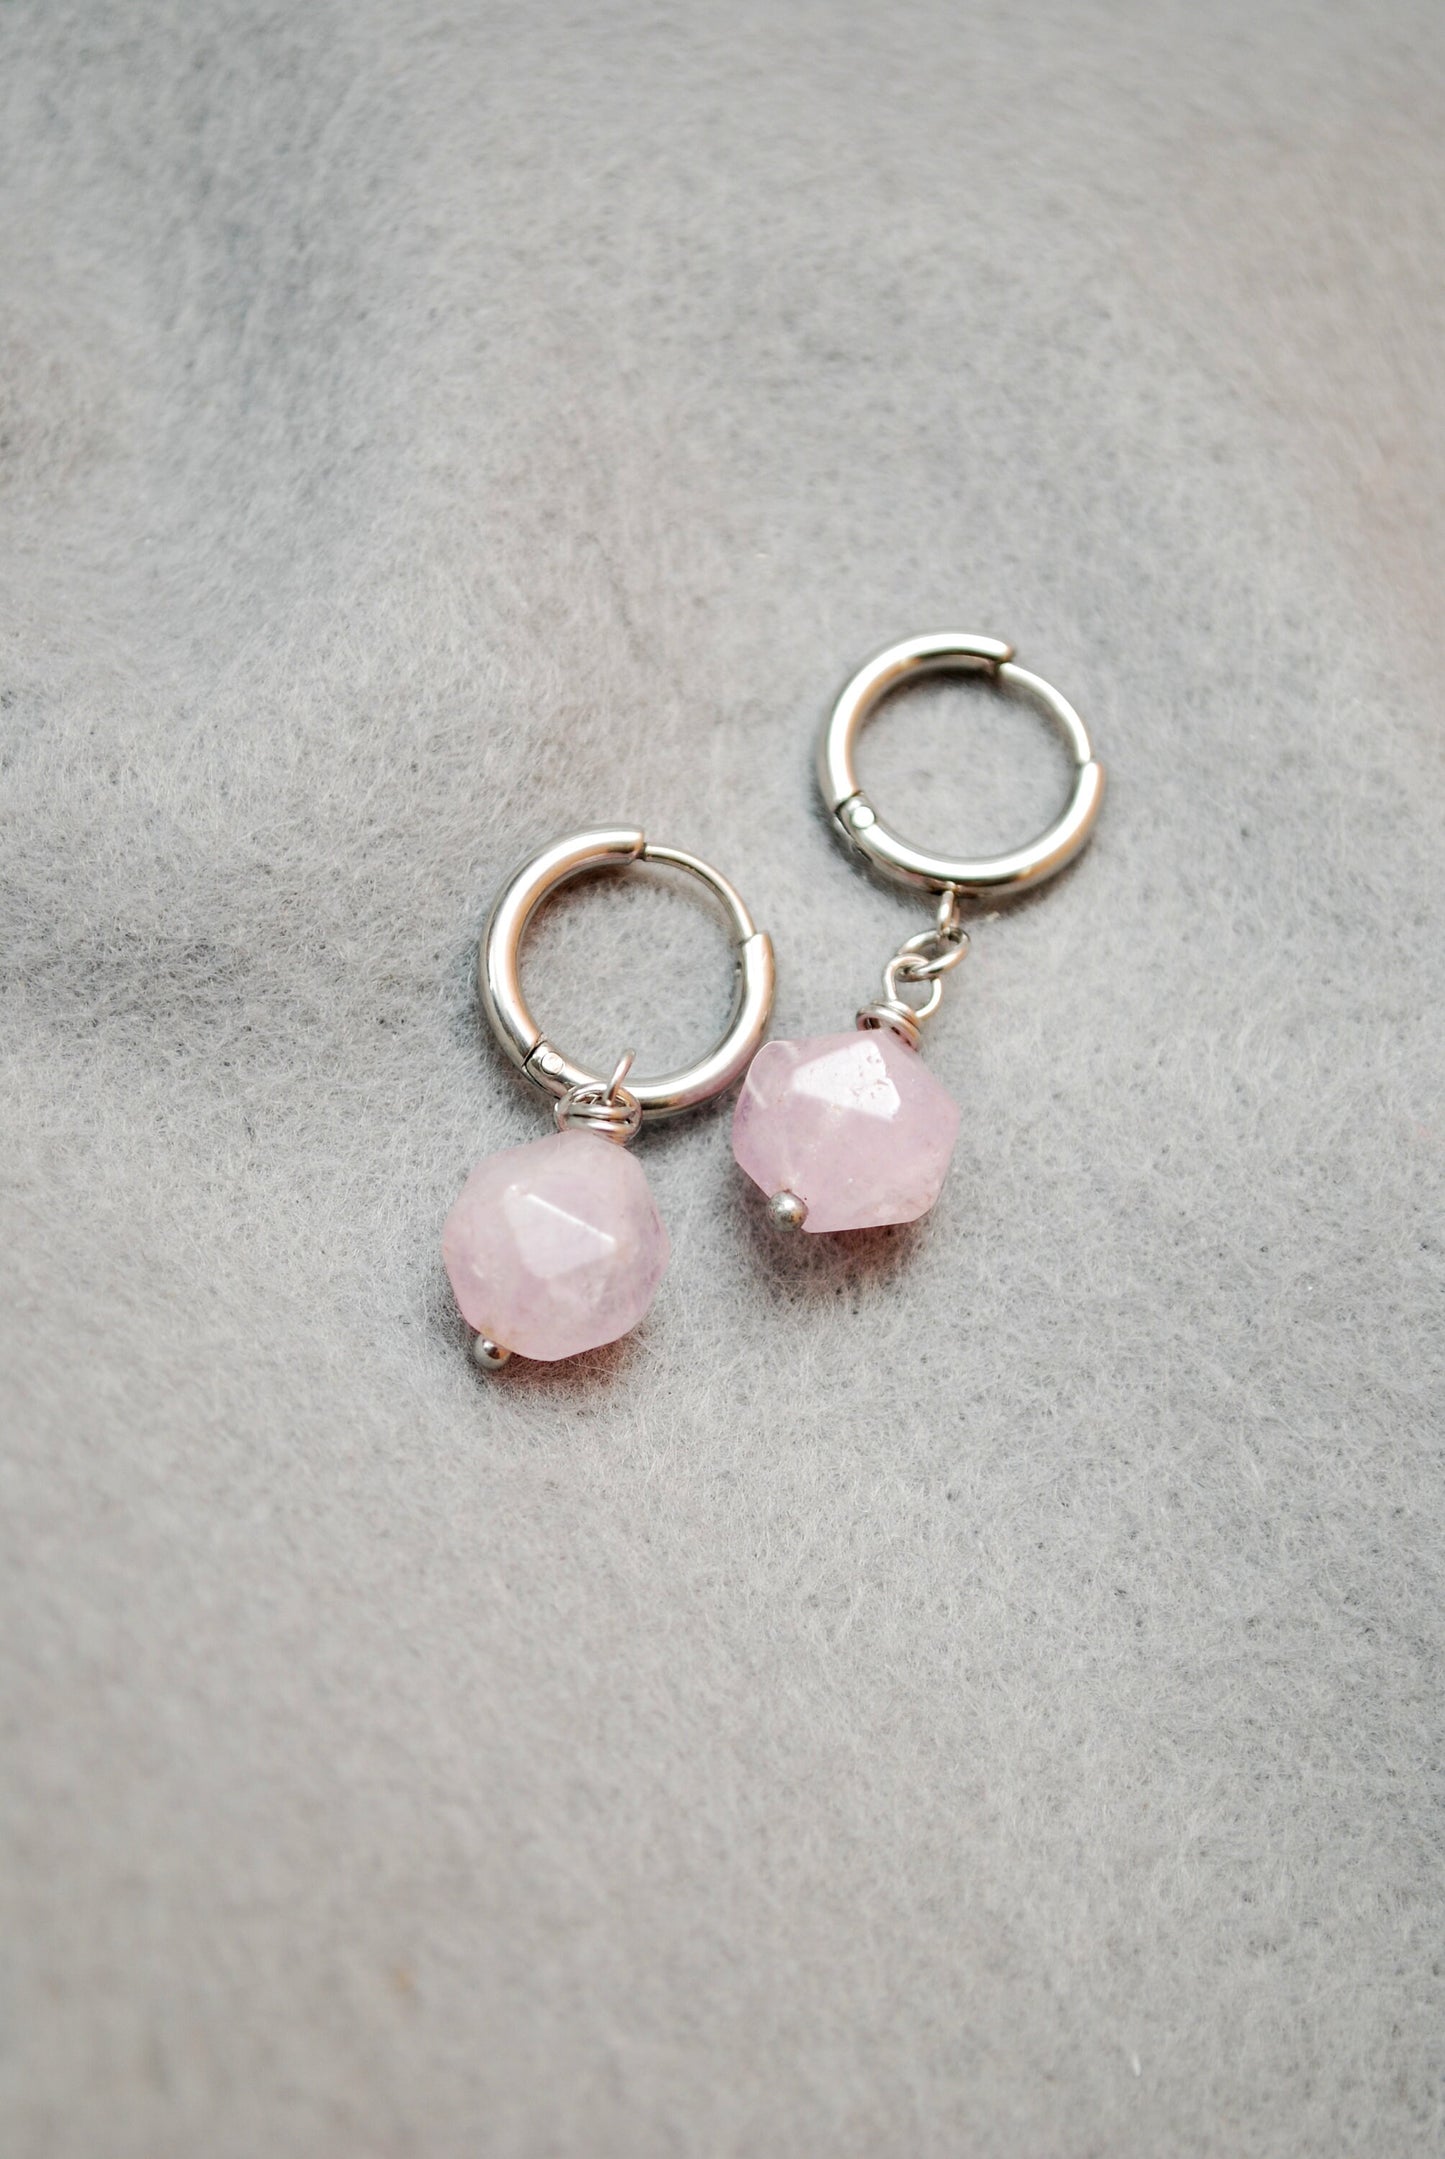 Elegant pink stone earrings, Handcrafted earrings with super seven stone, Elegant mimalist style, Estibela design, 5cm - 2"